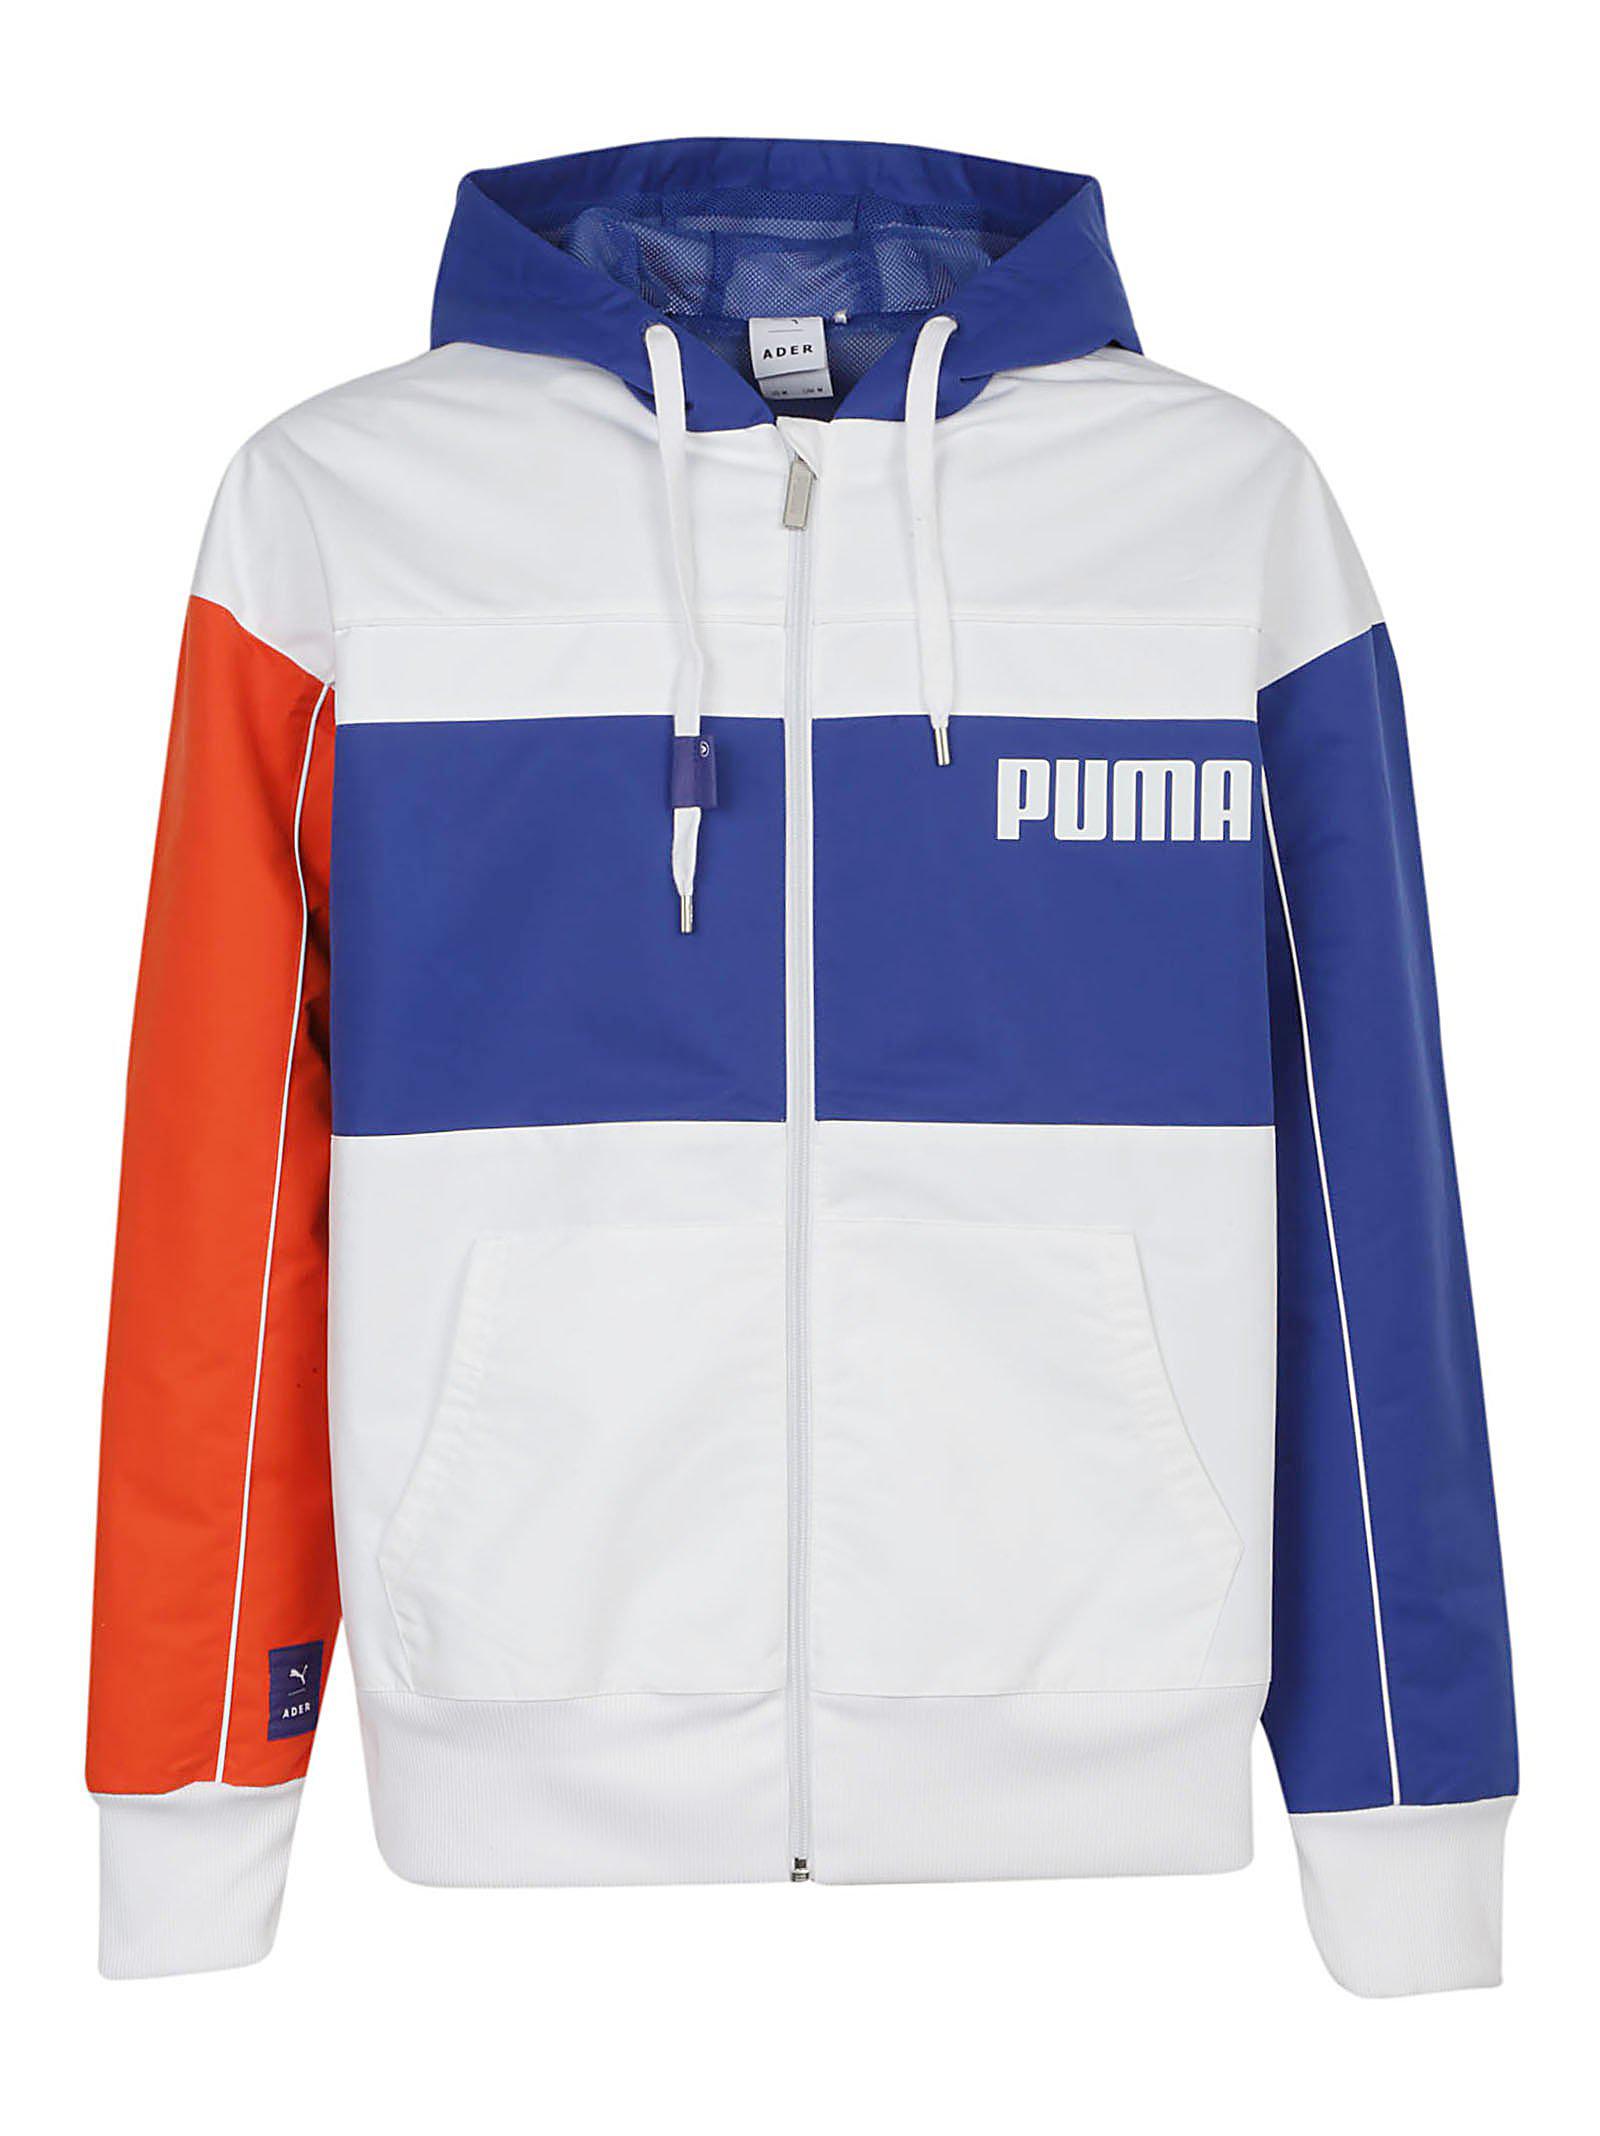 puma blue and white jacket